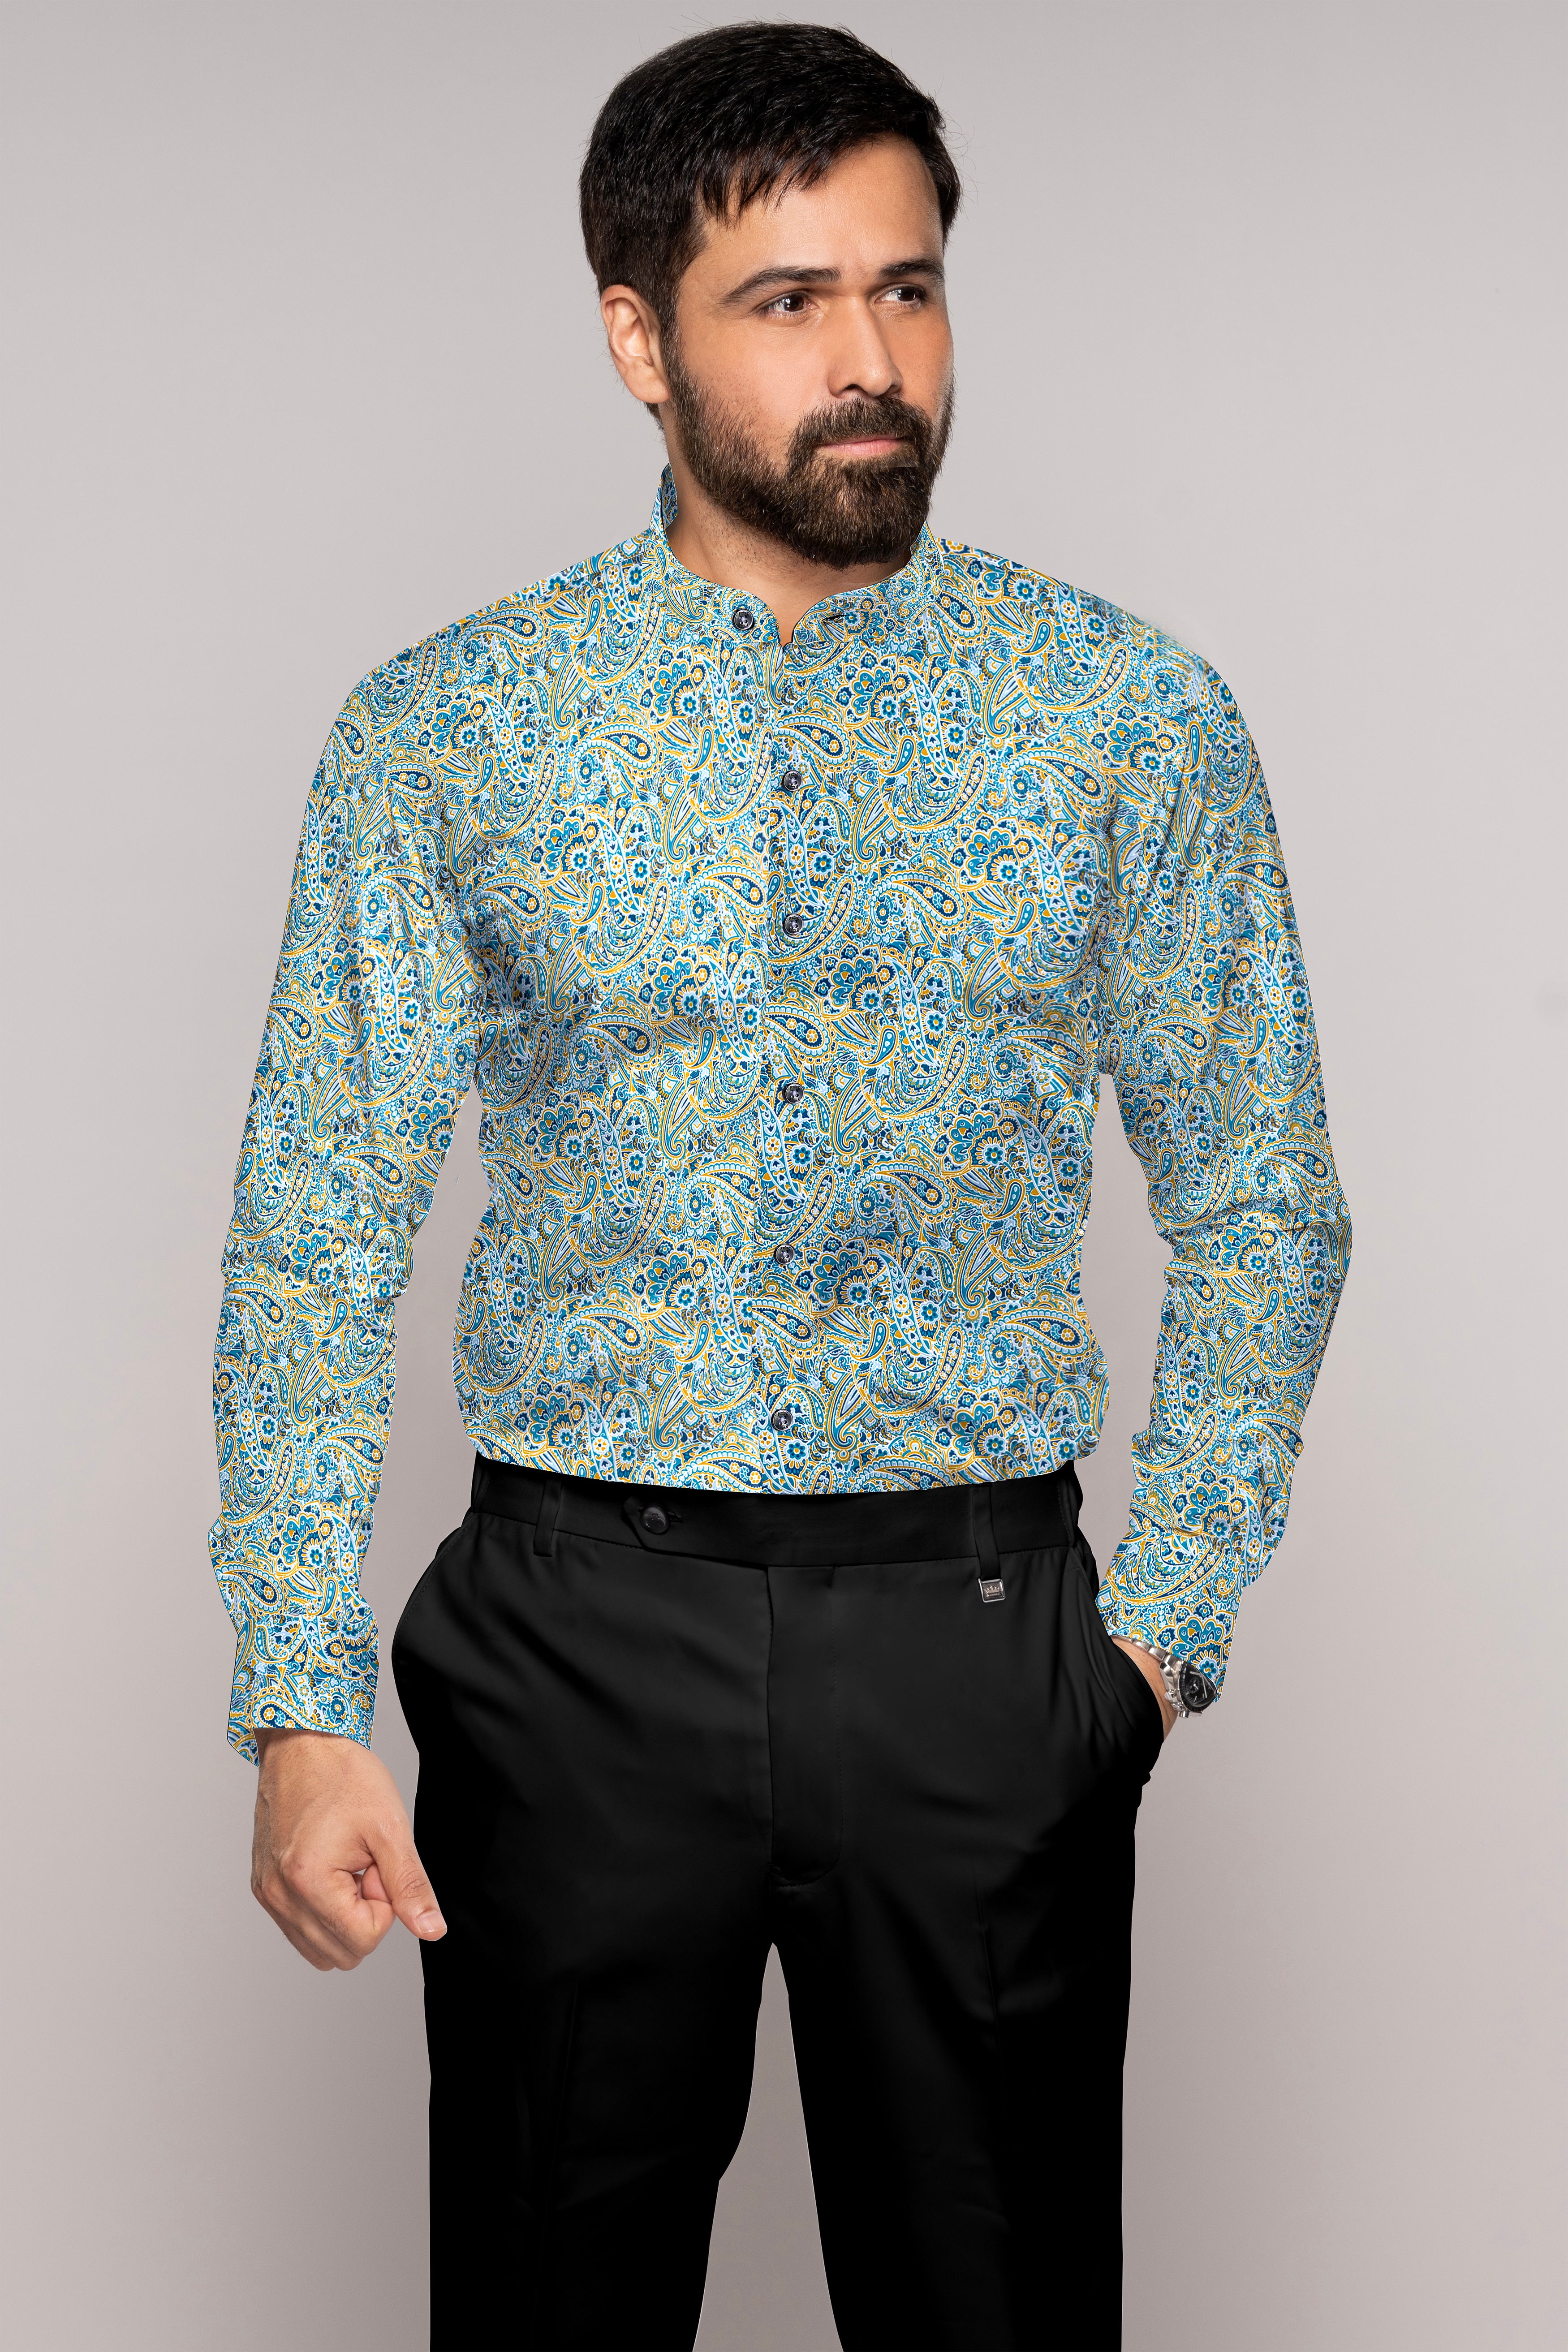 Ocean Blue and Alpine Brown Paisley Printed Super Soft Premium Cotton Shirt